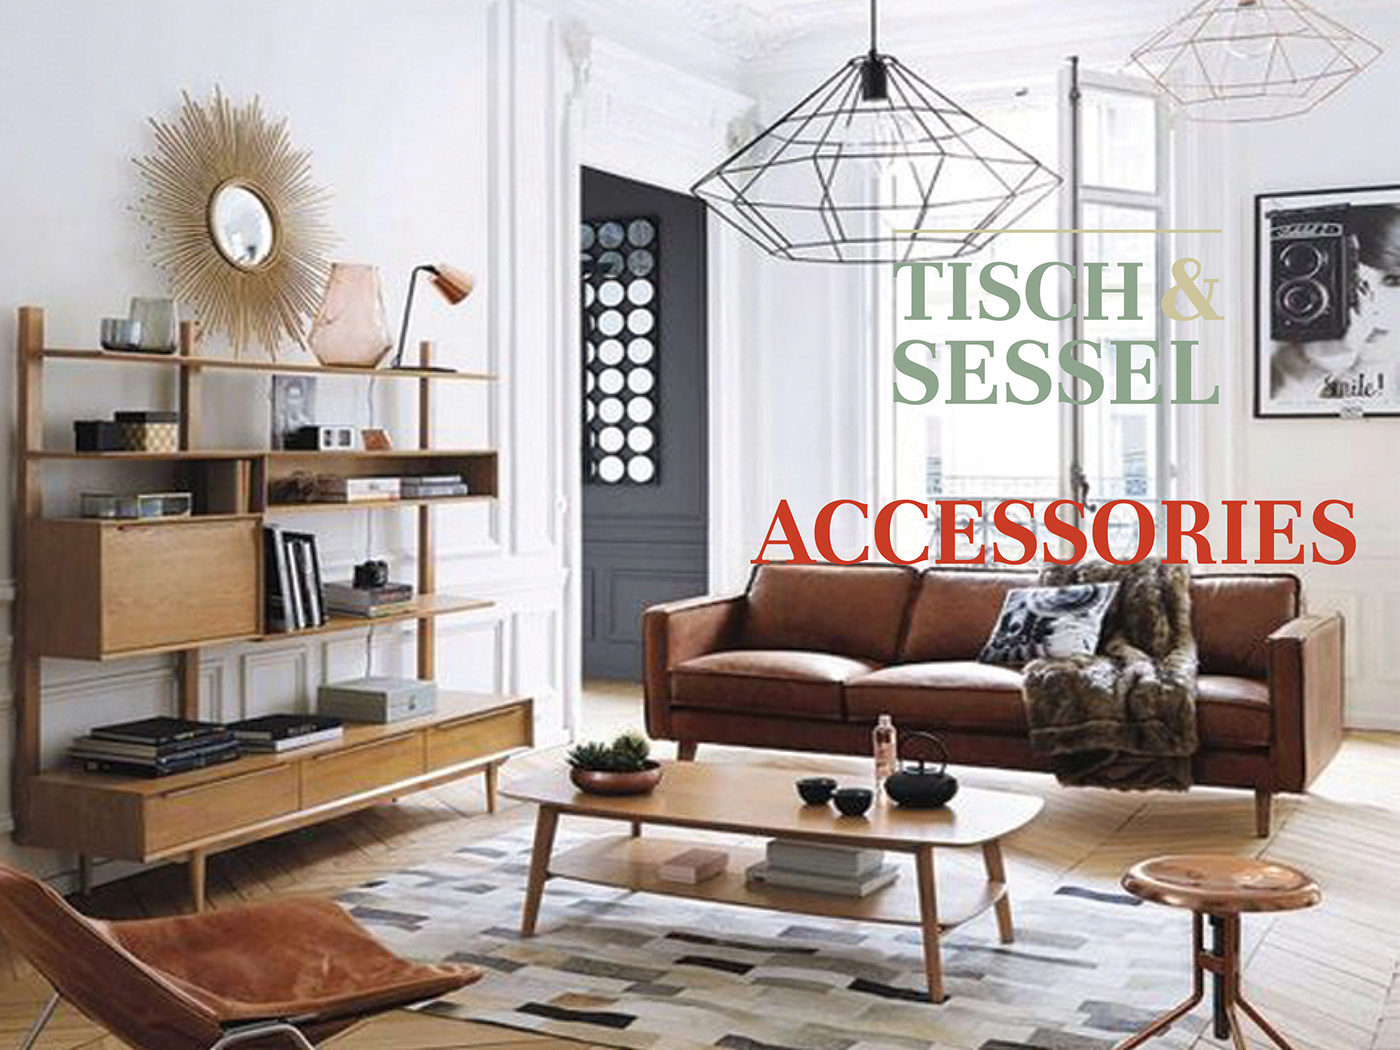 Tisch & Sessel furiniture branding  catalog